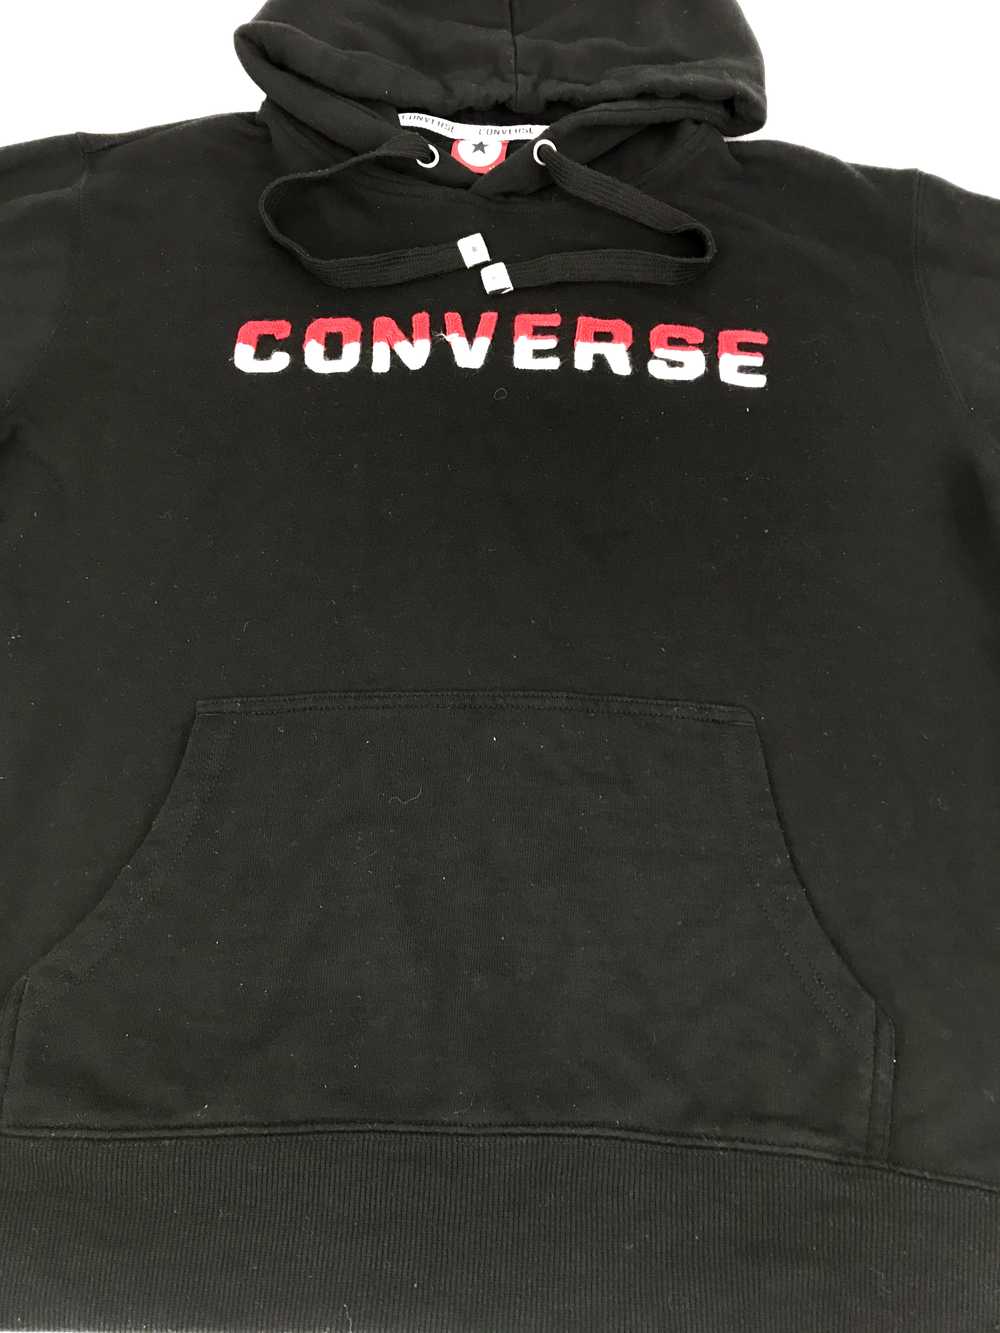 Converse Spell Out Logo Hoodie Sweatshirt Pull Ov… - image 2